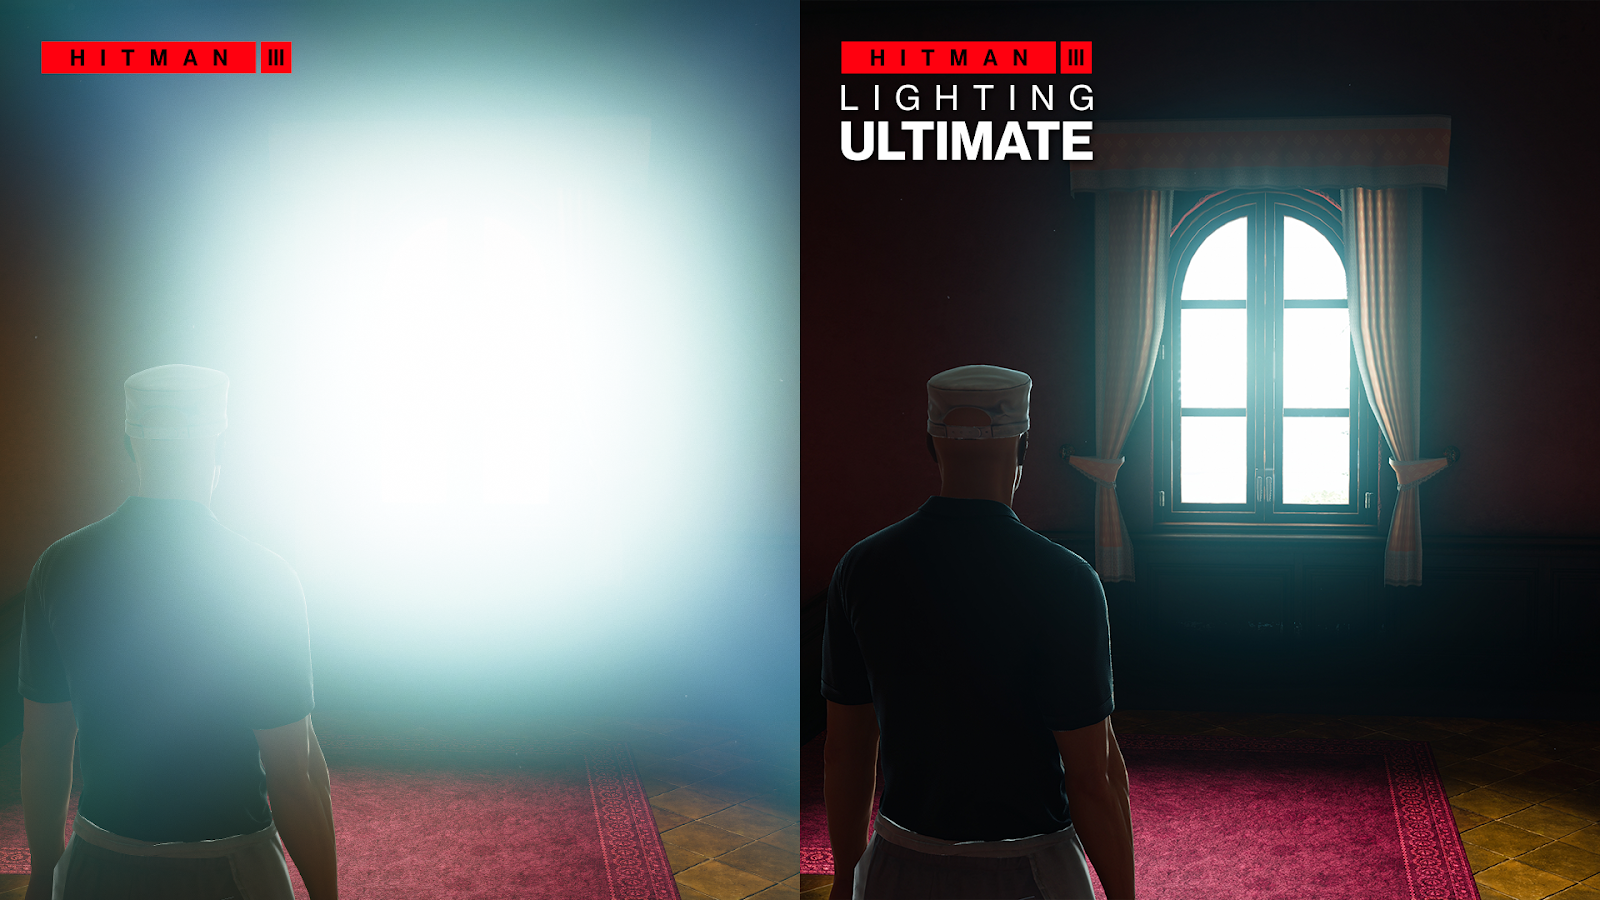 Blinding Lights Suit - Hitman 3 Mods - ModWorkshop